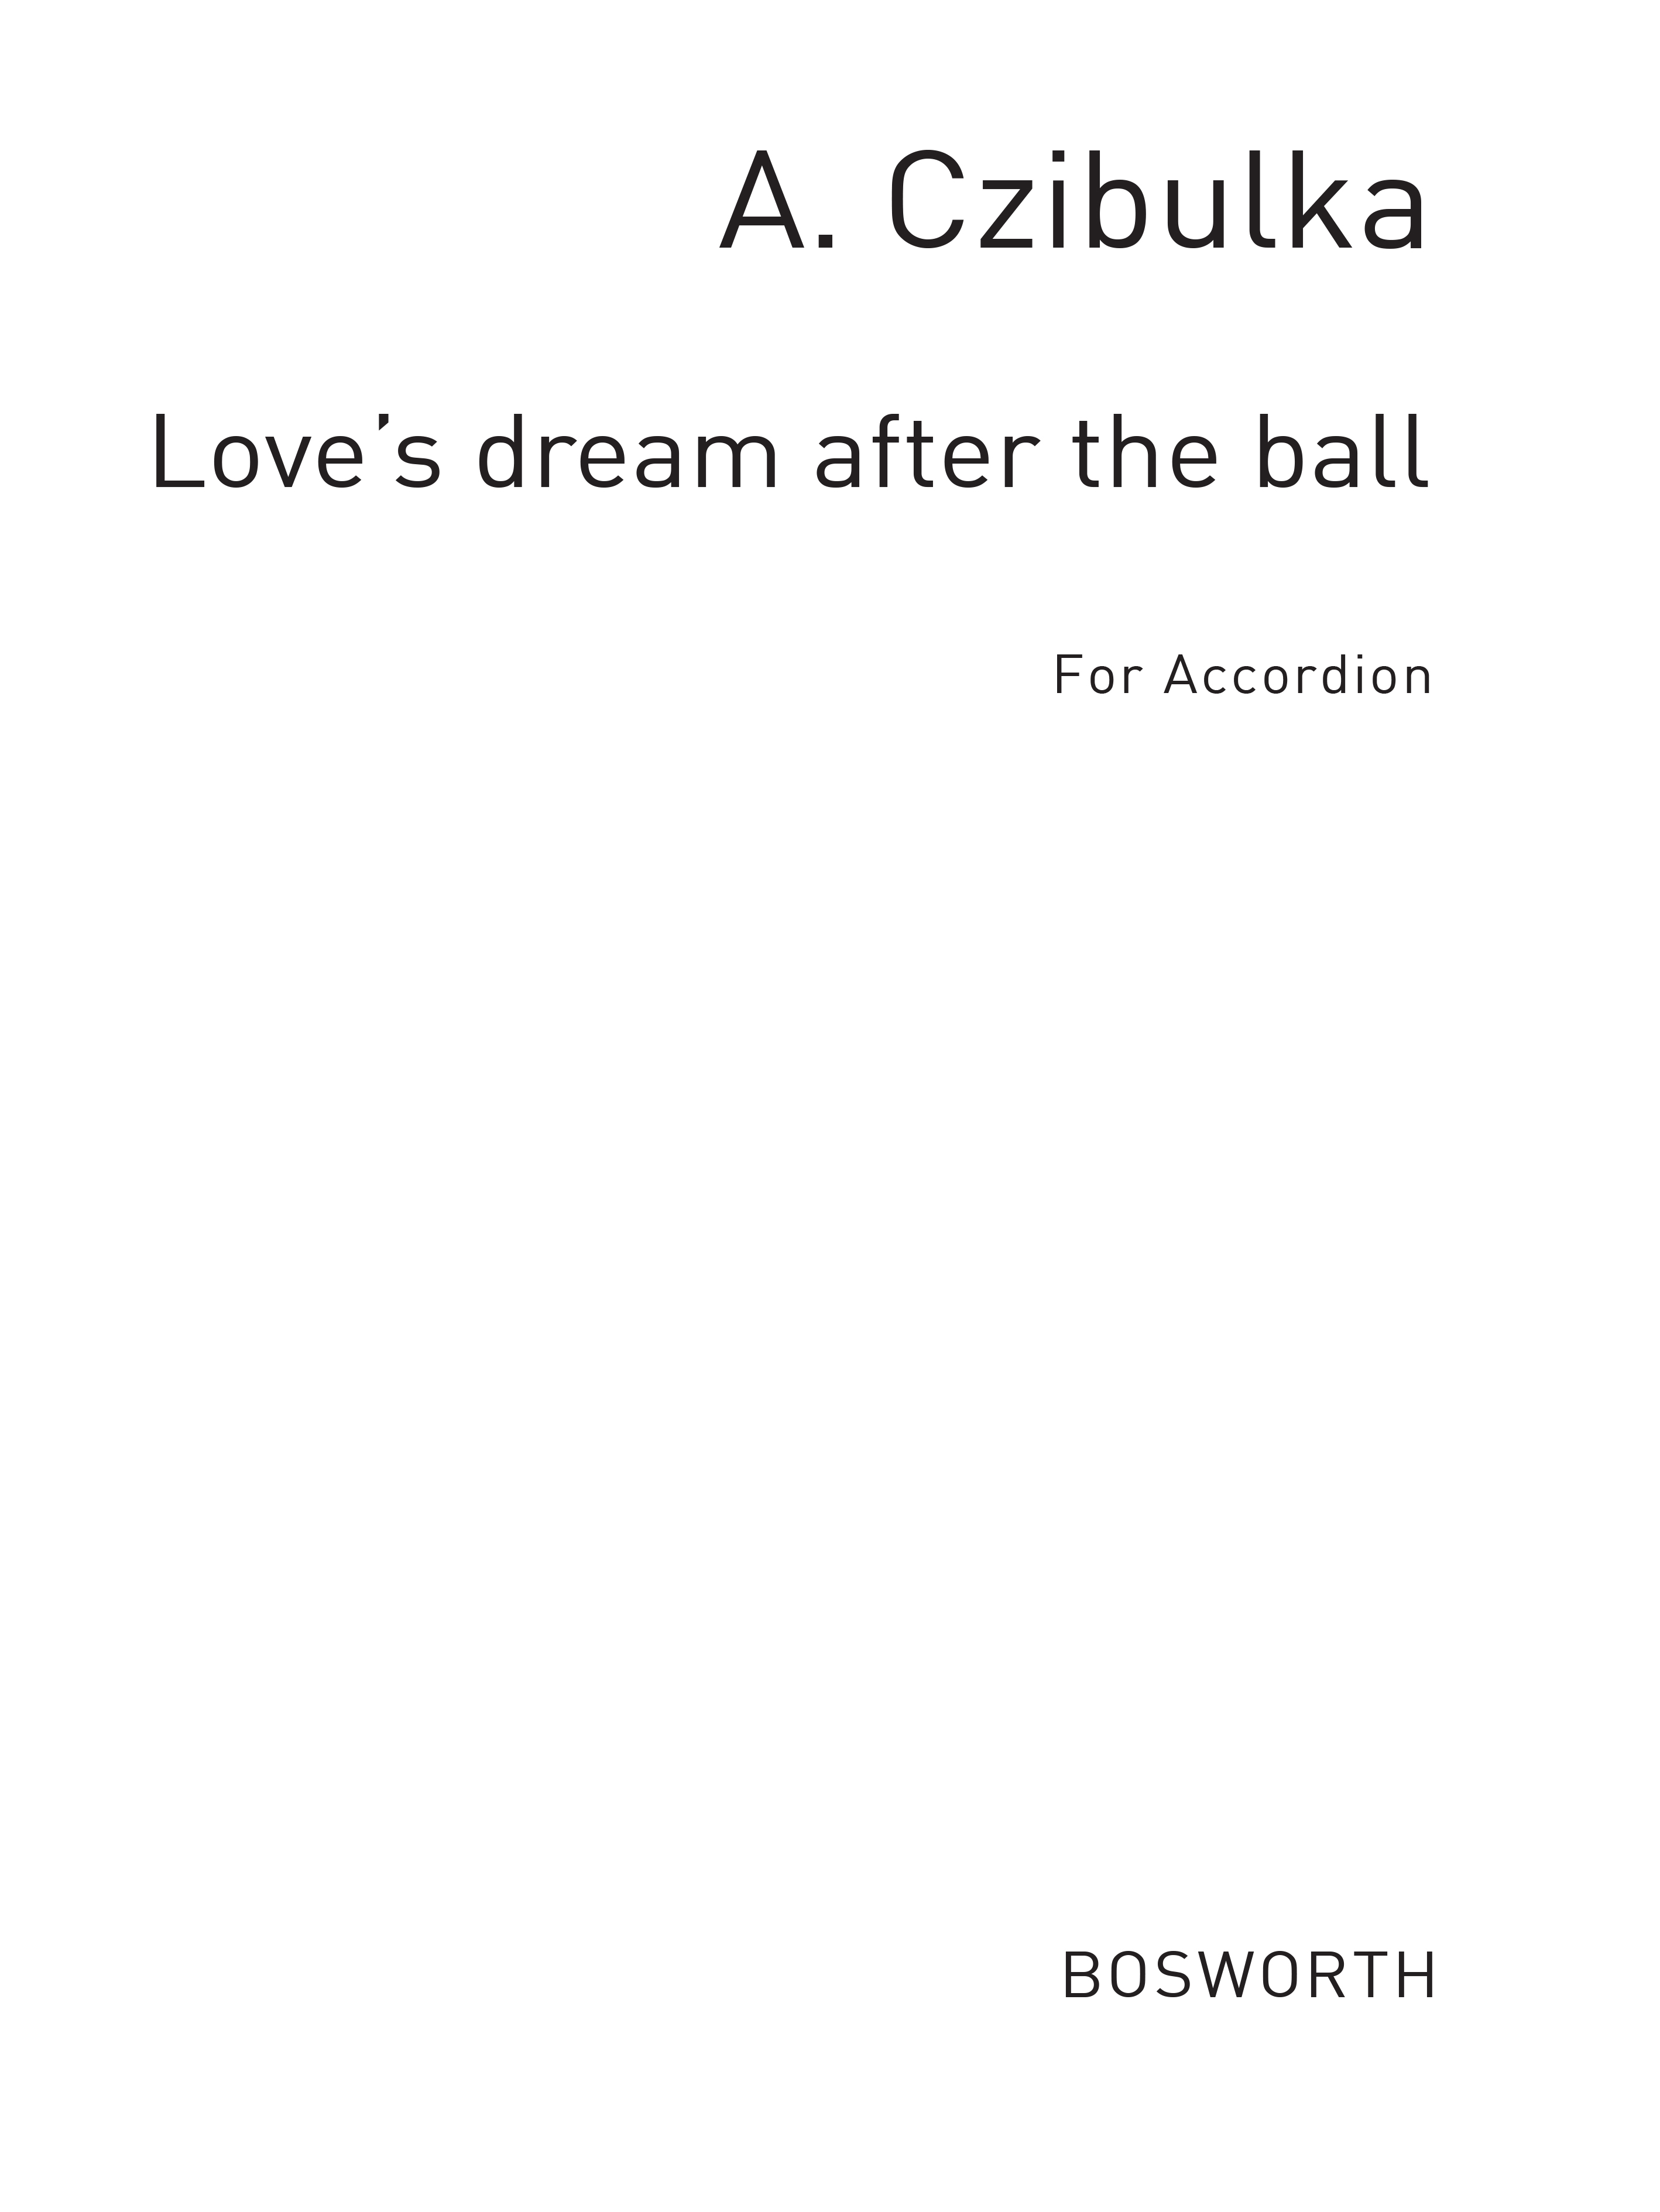 A. Czibulka: Love's Dream After The Ball